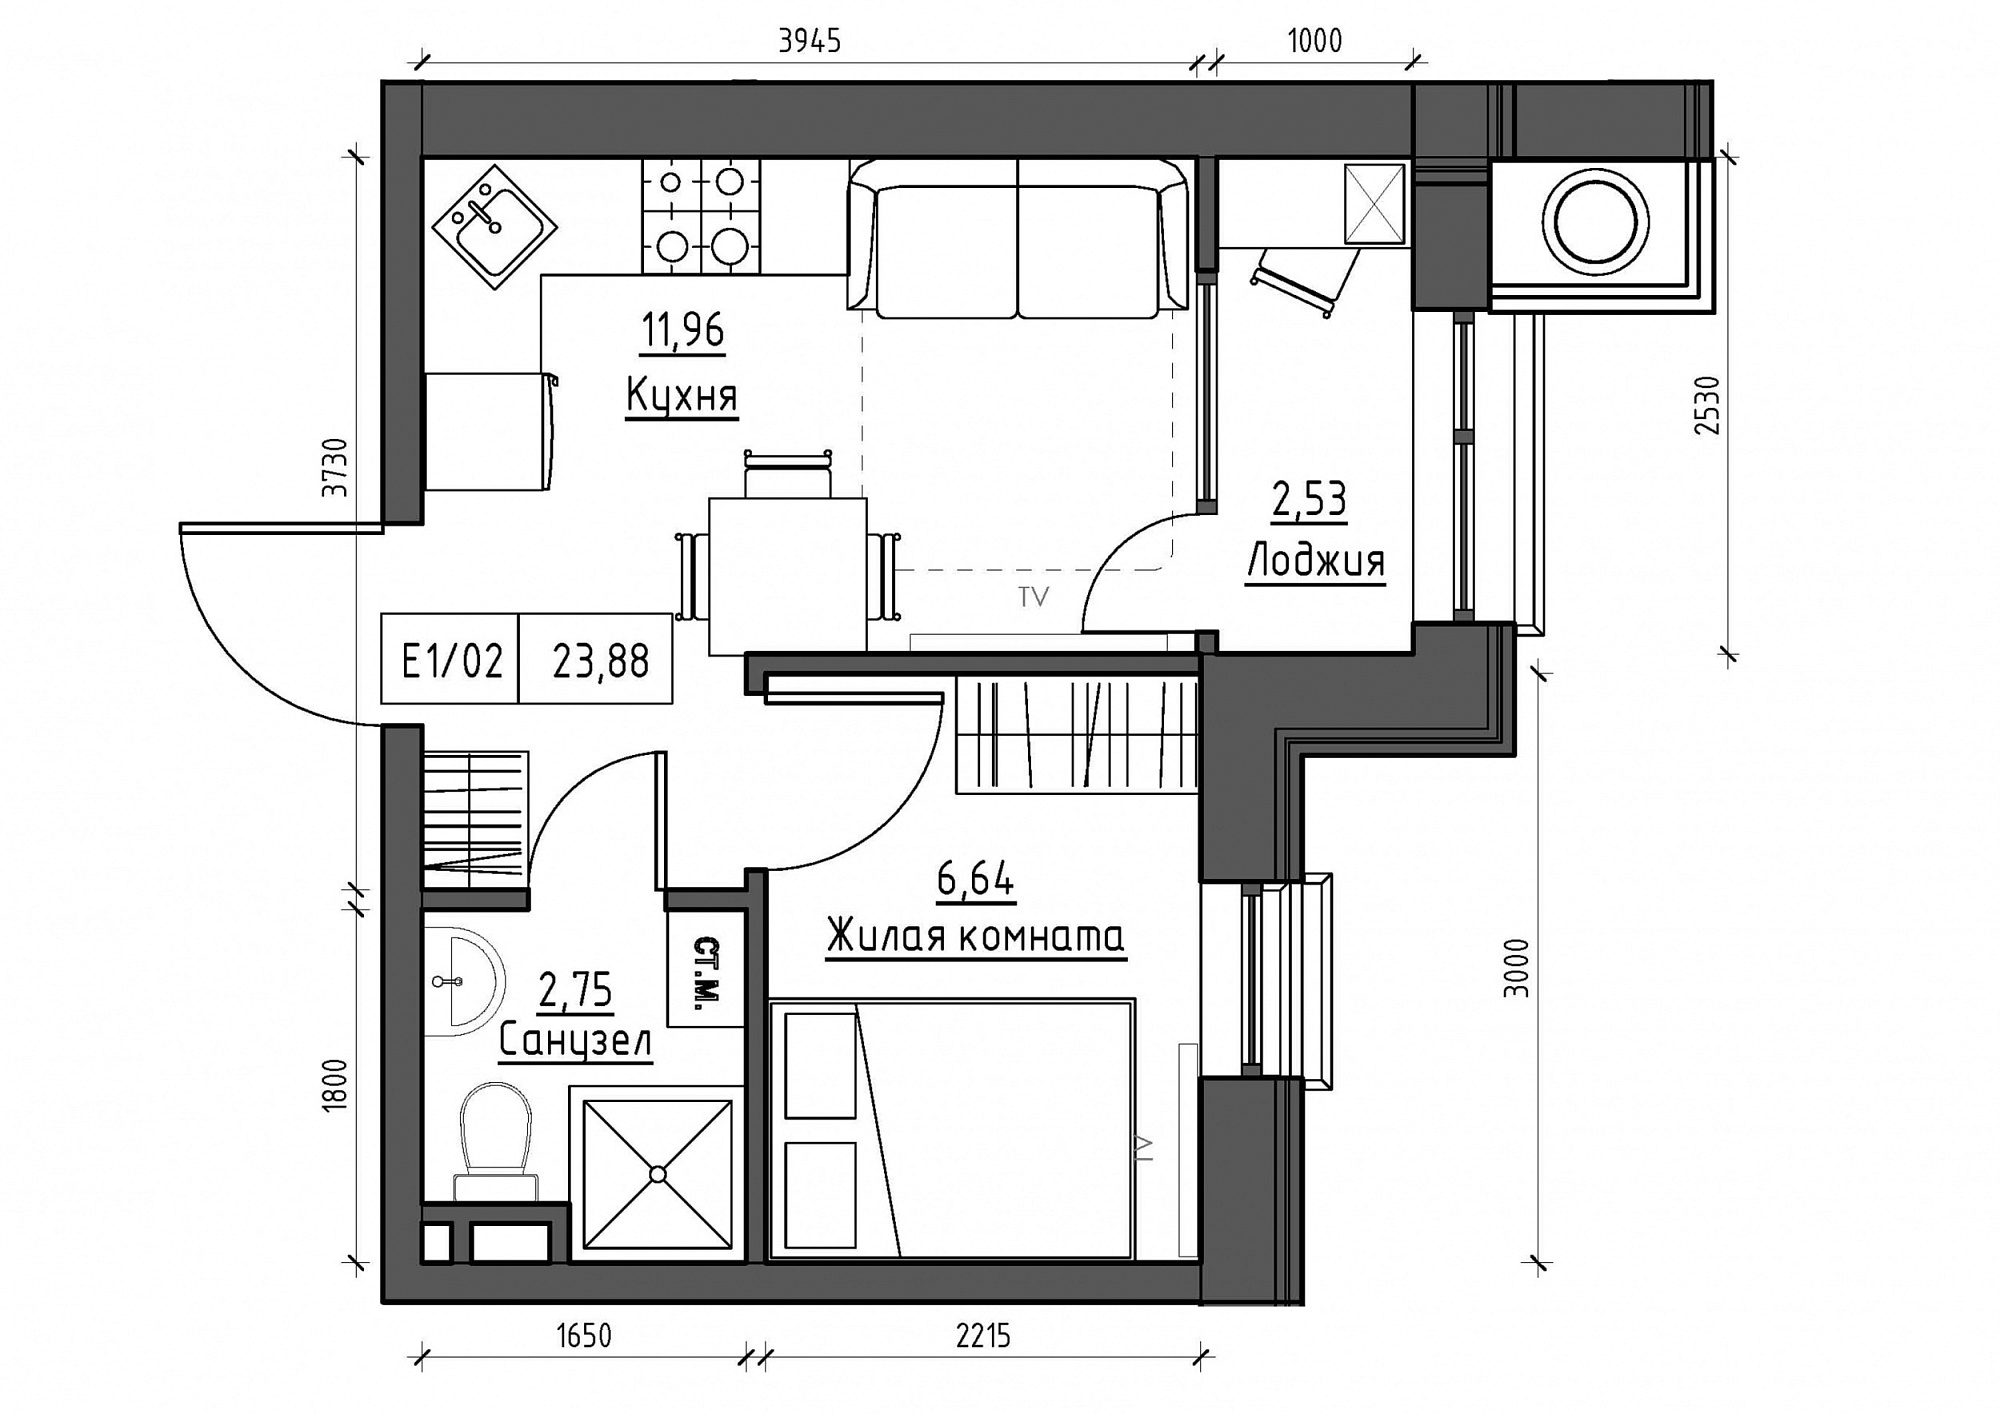 Planning 1-rm flats area 23.88m2, KS-012-05/0018.